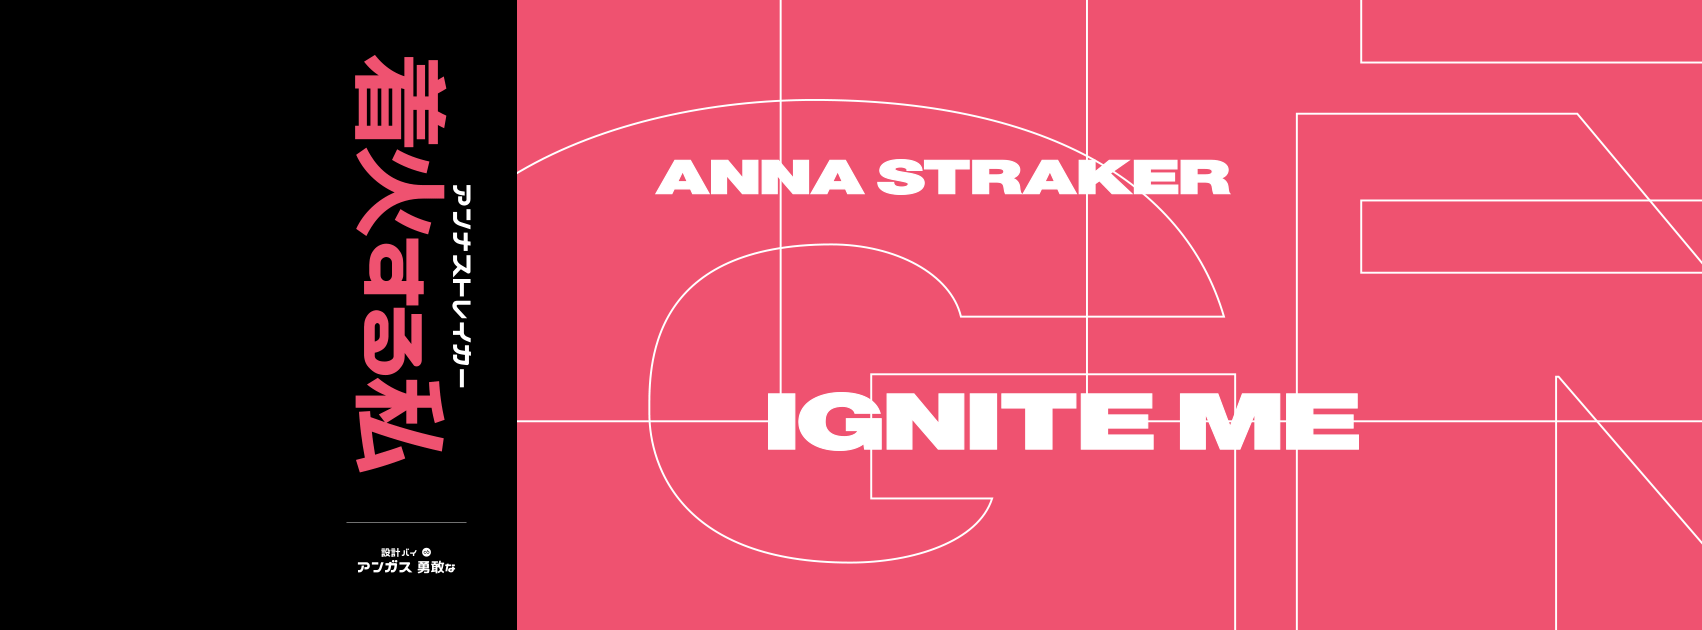 Ignite Me - Anna Straker © Alex Knight